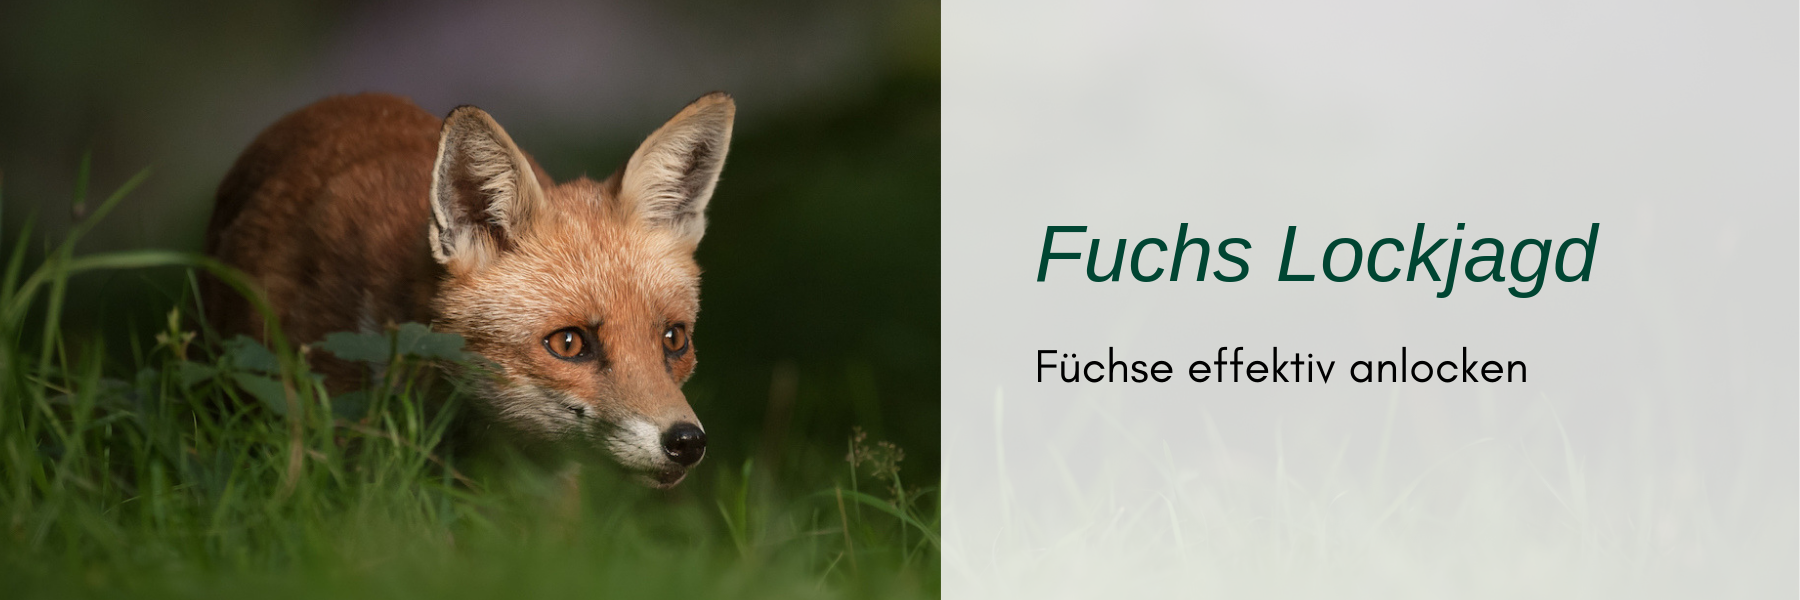 Fuchs Lockjagd - Wie man Füchse anlockt